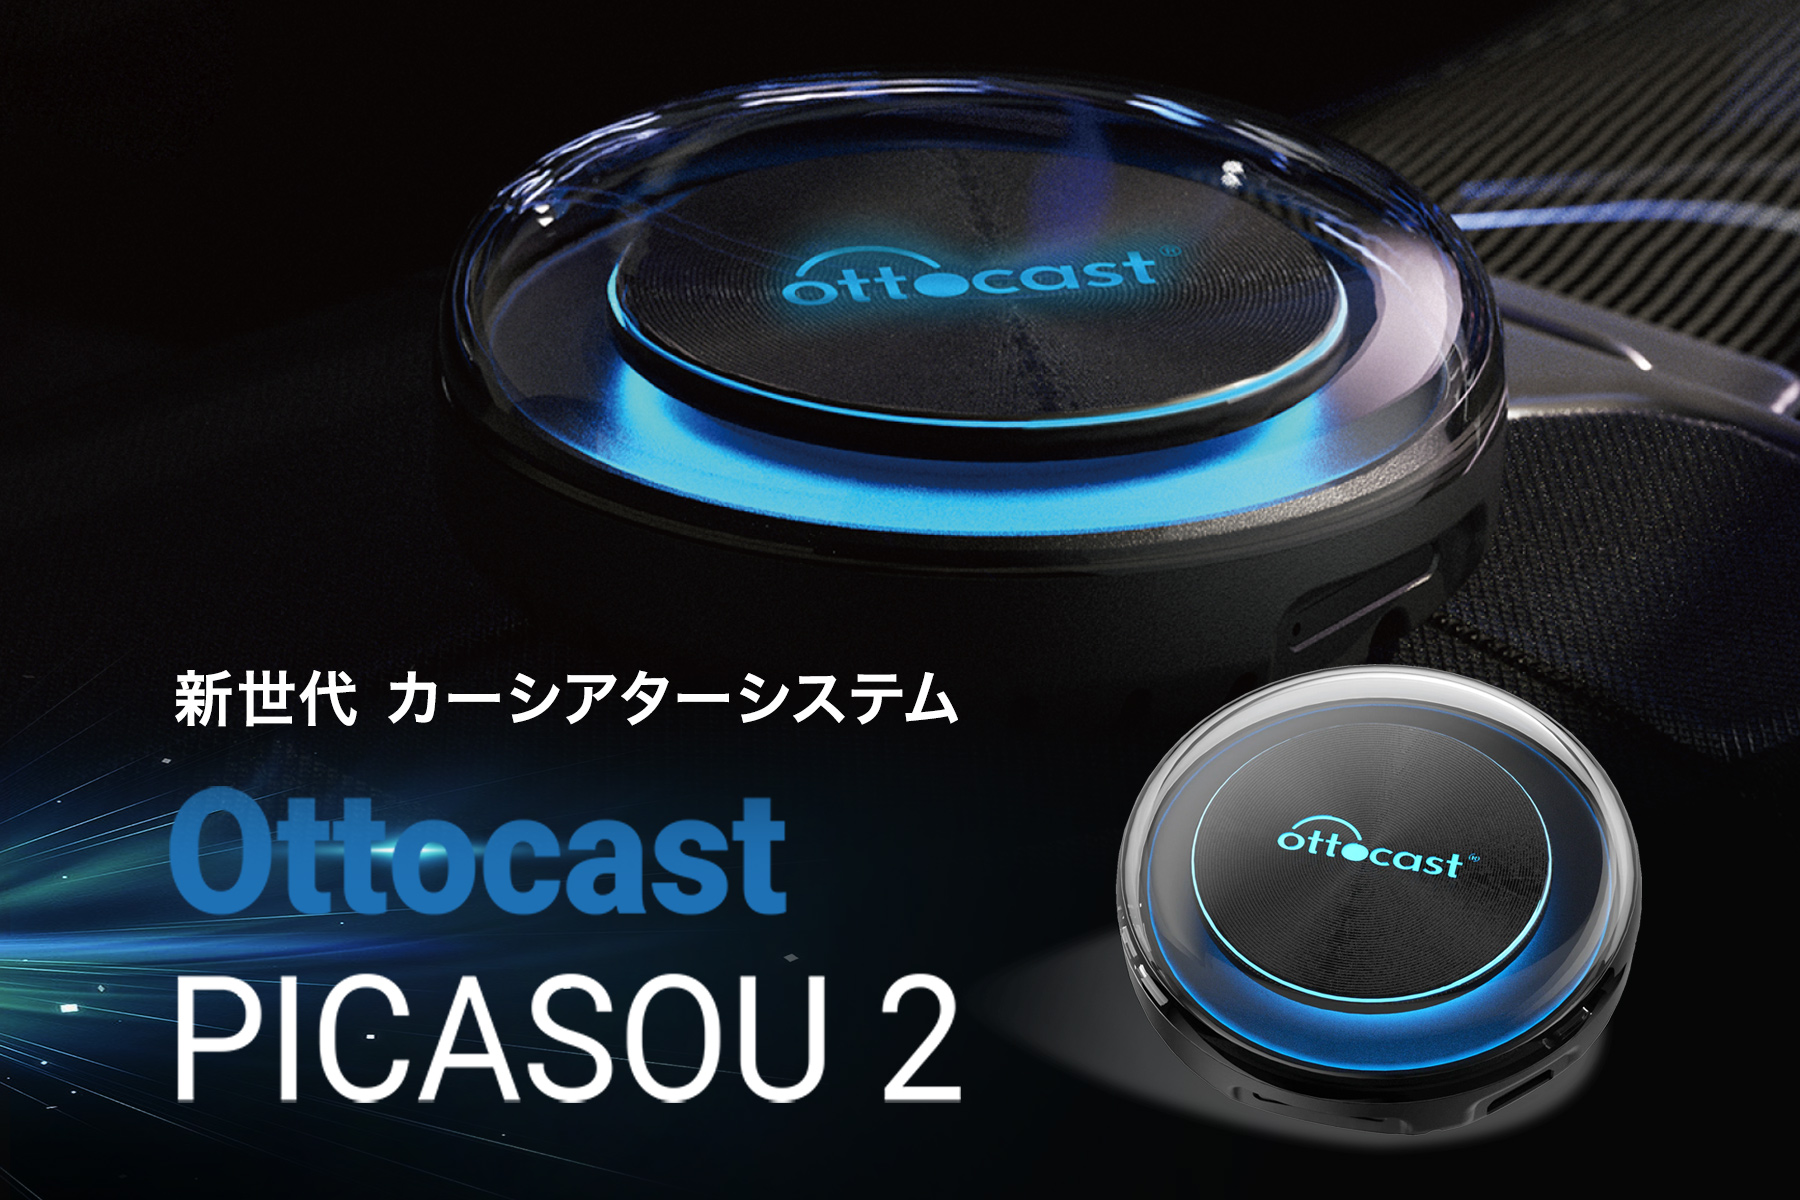 Ottocast PICASOU2:PCS40 - イノベイティブ販売